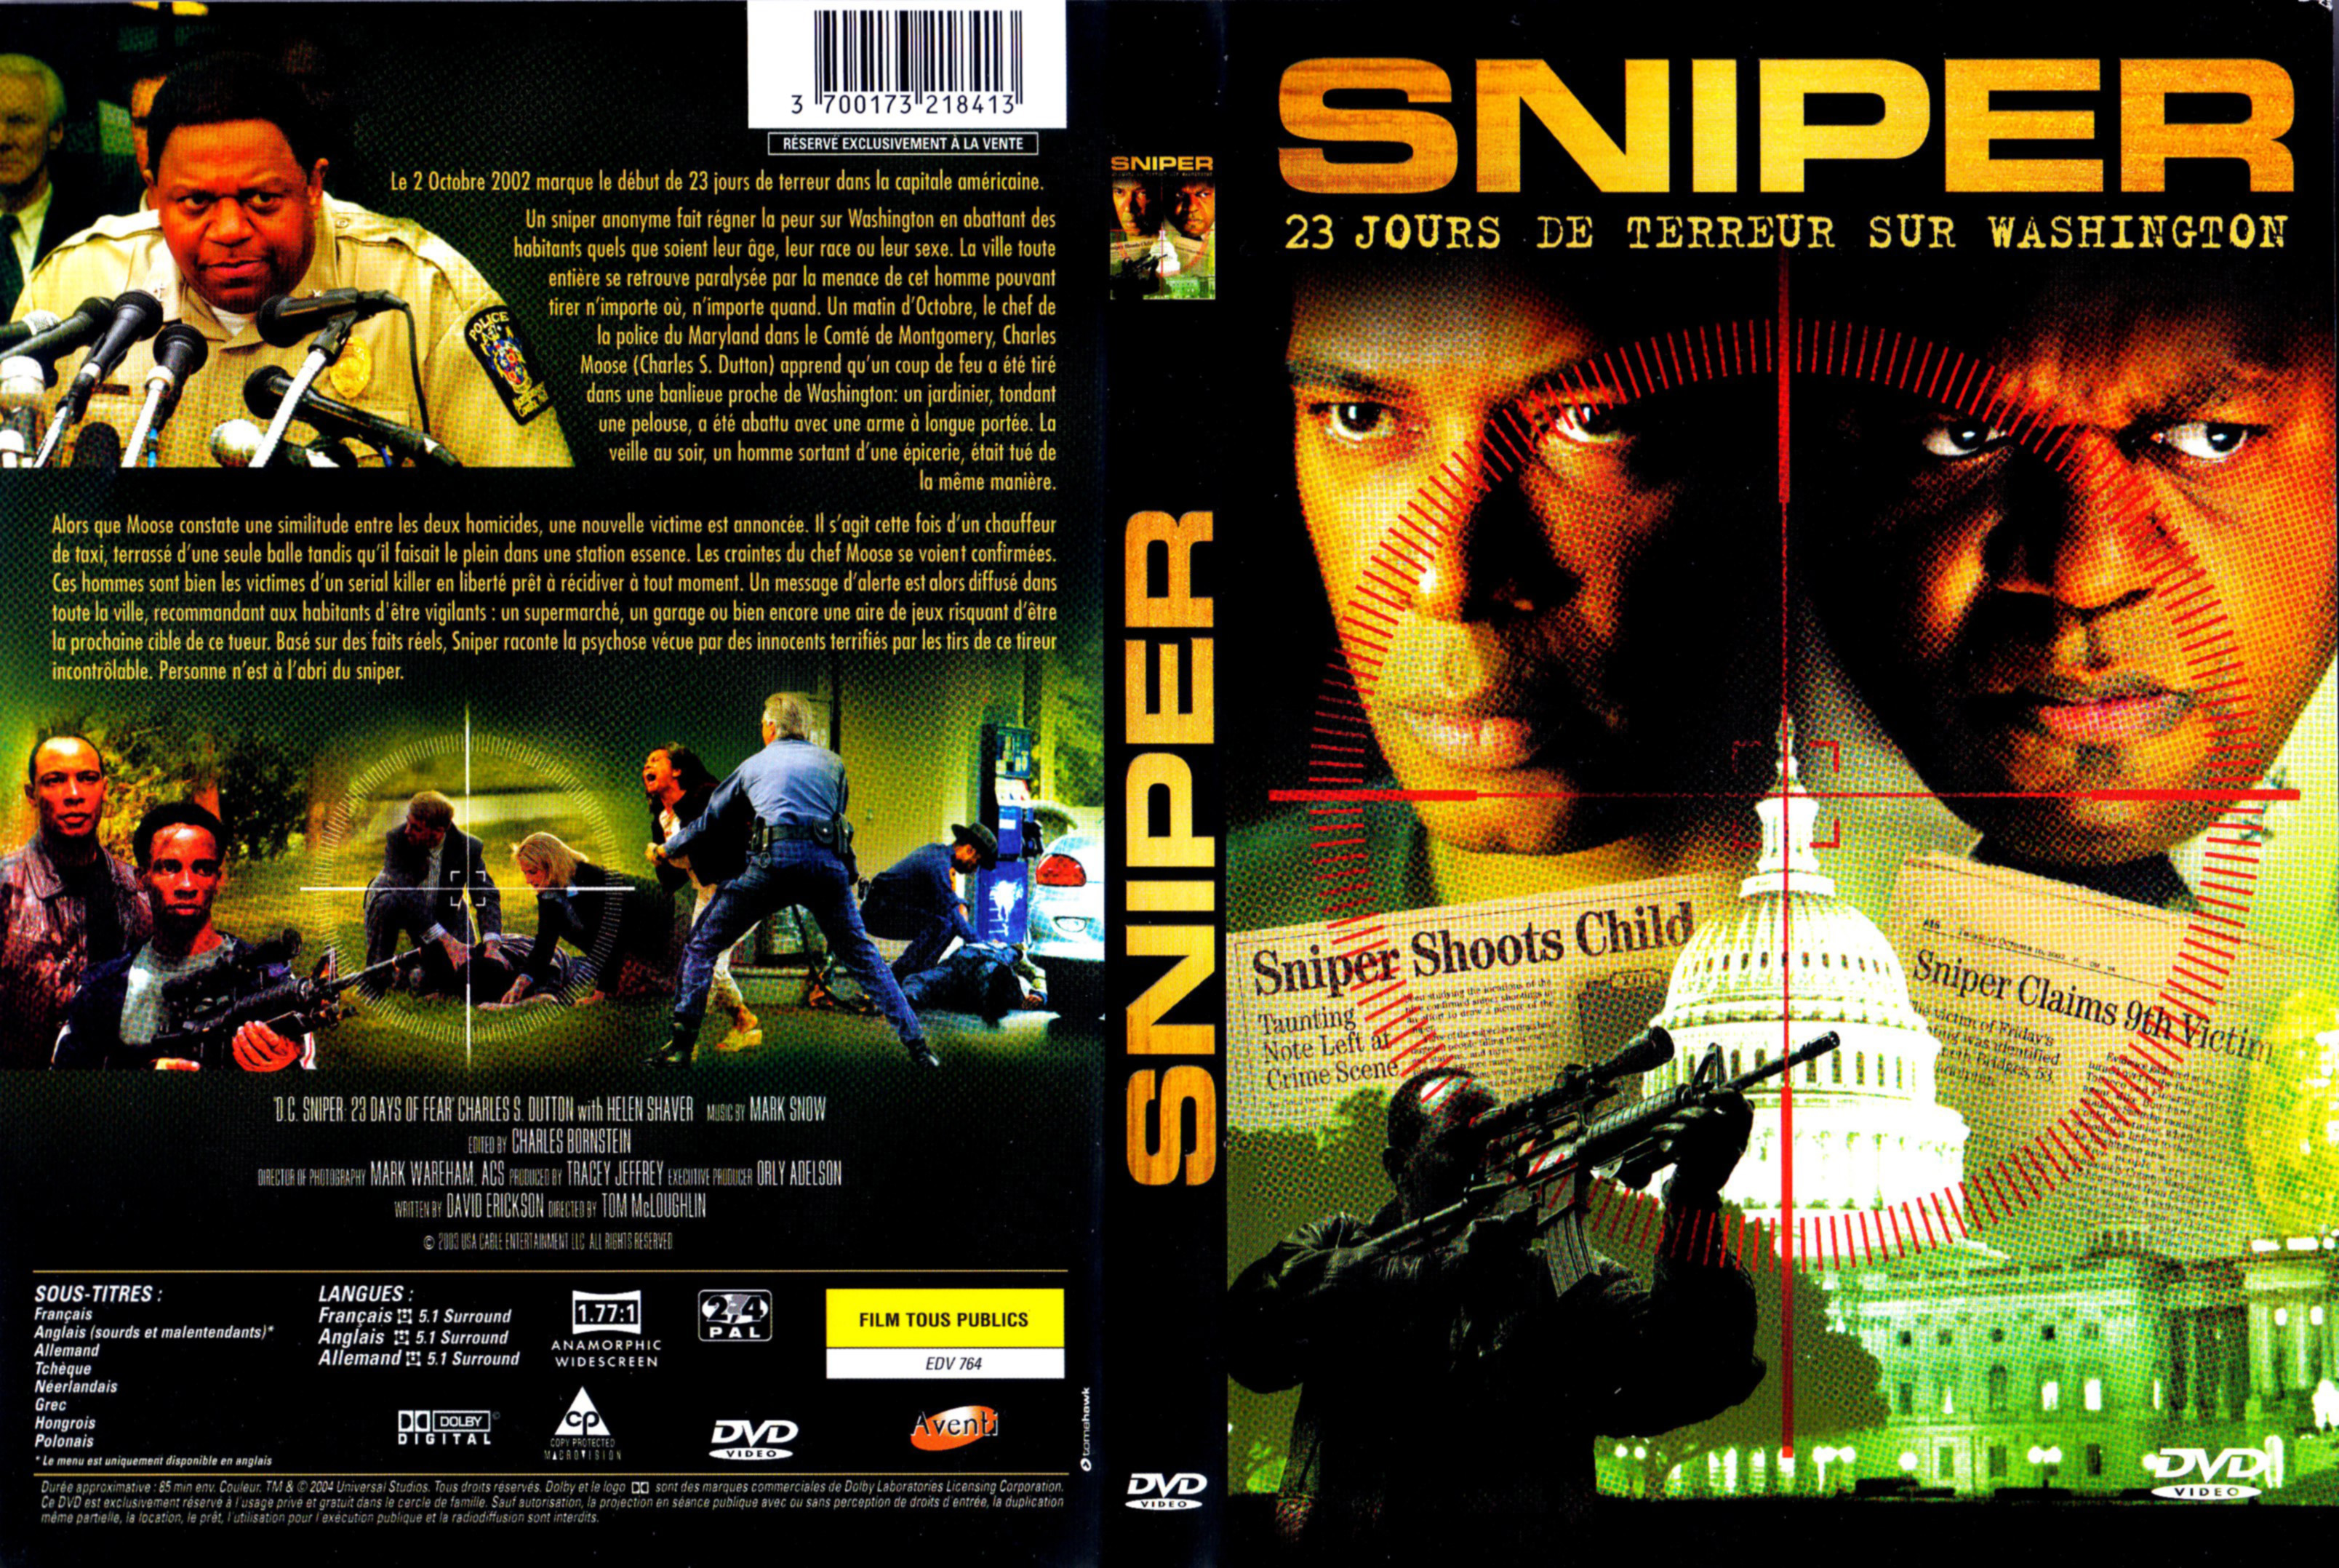 Jaquette DVD Sniper 23 jours